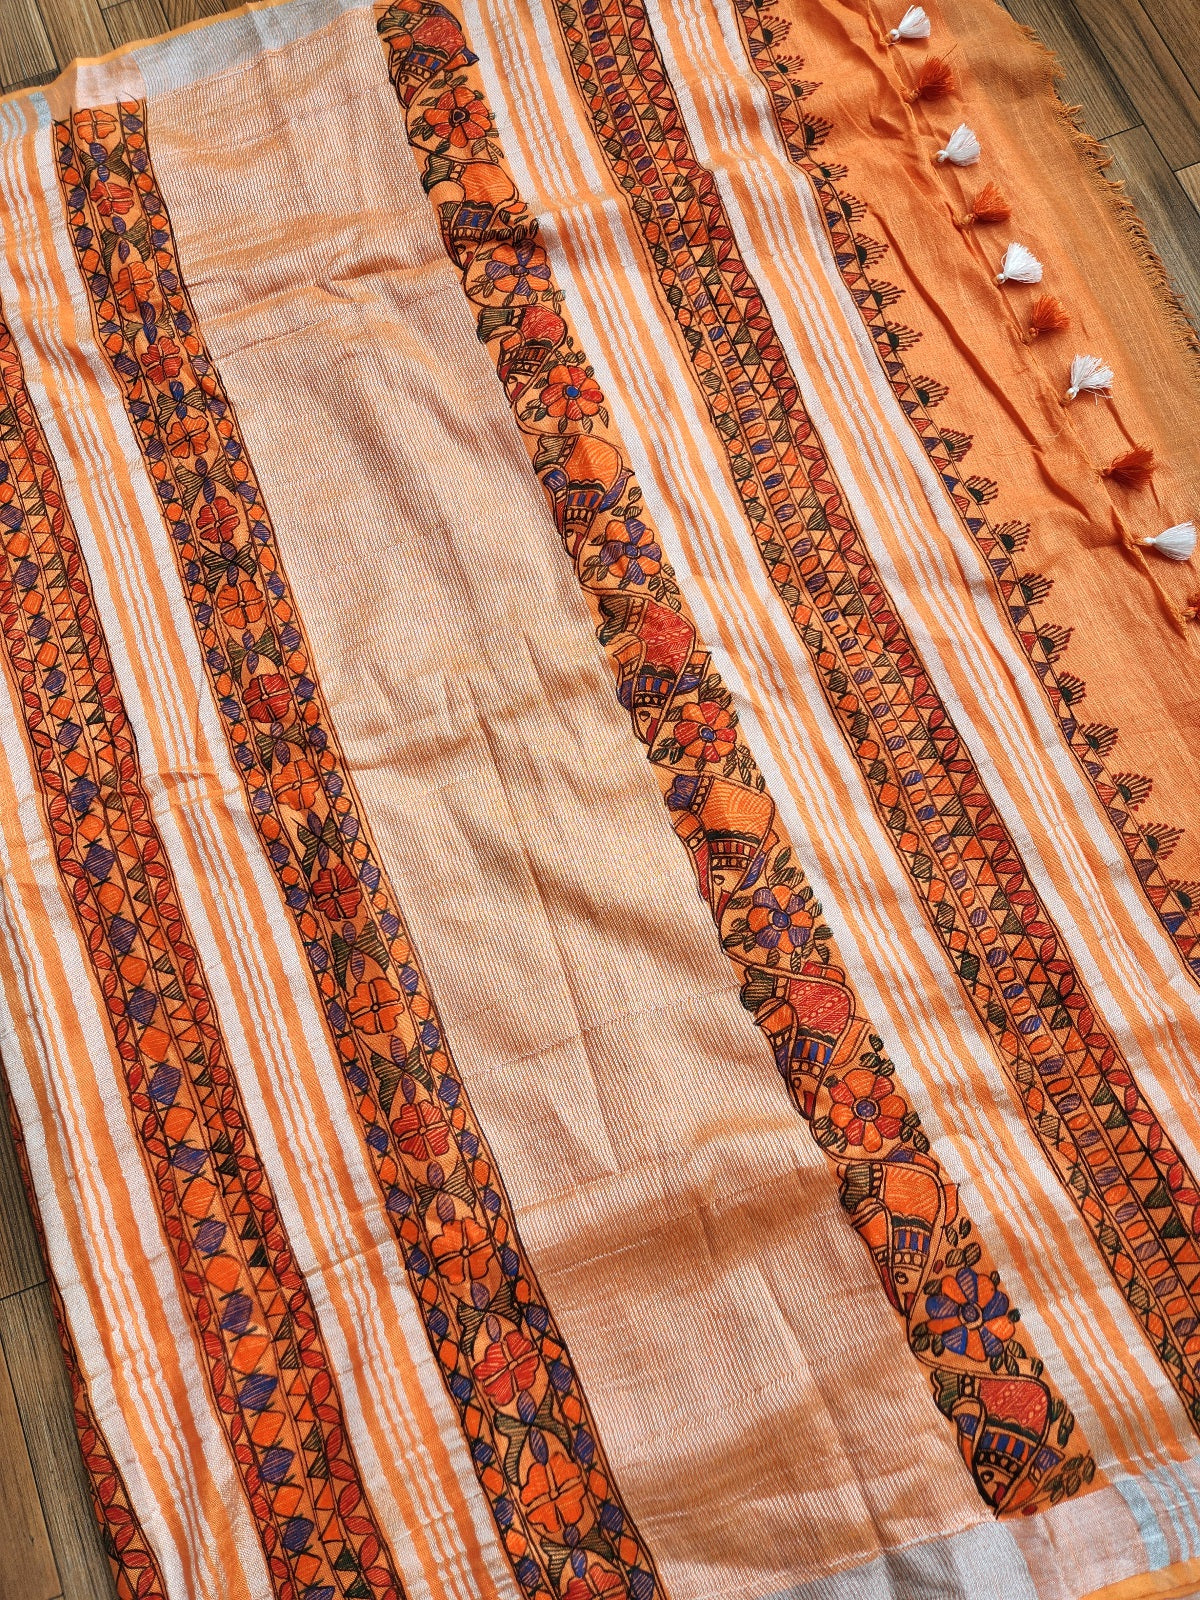 haldishopping wedding orange saree madhubani saree linen Indian sarees gifts